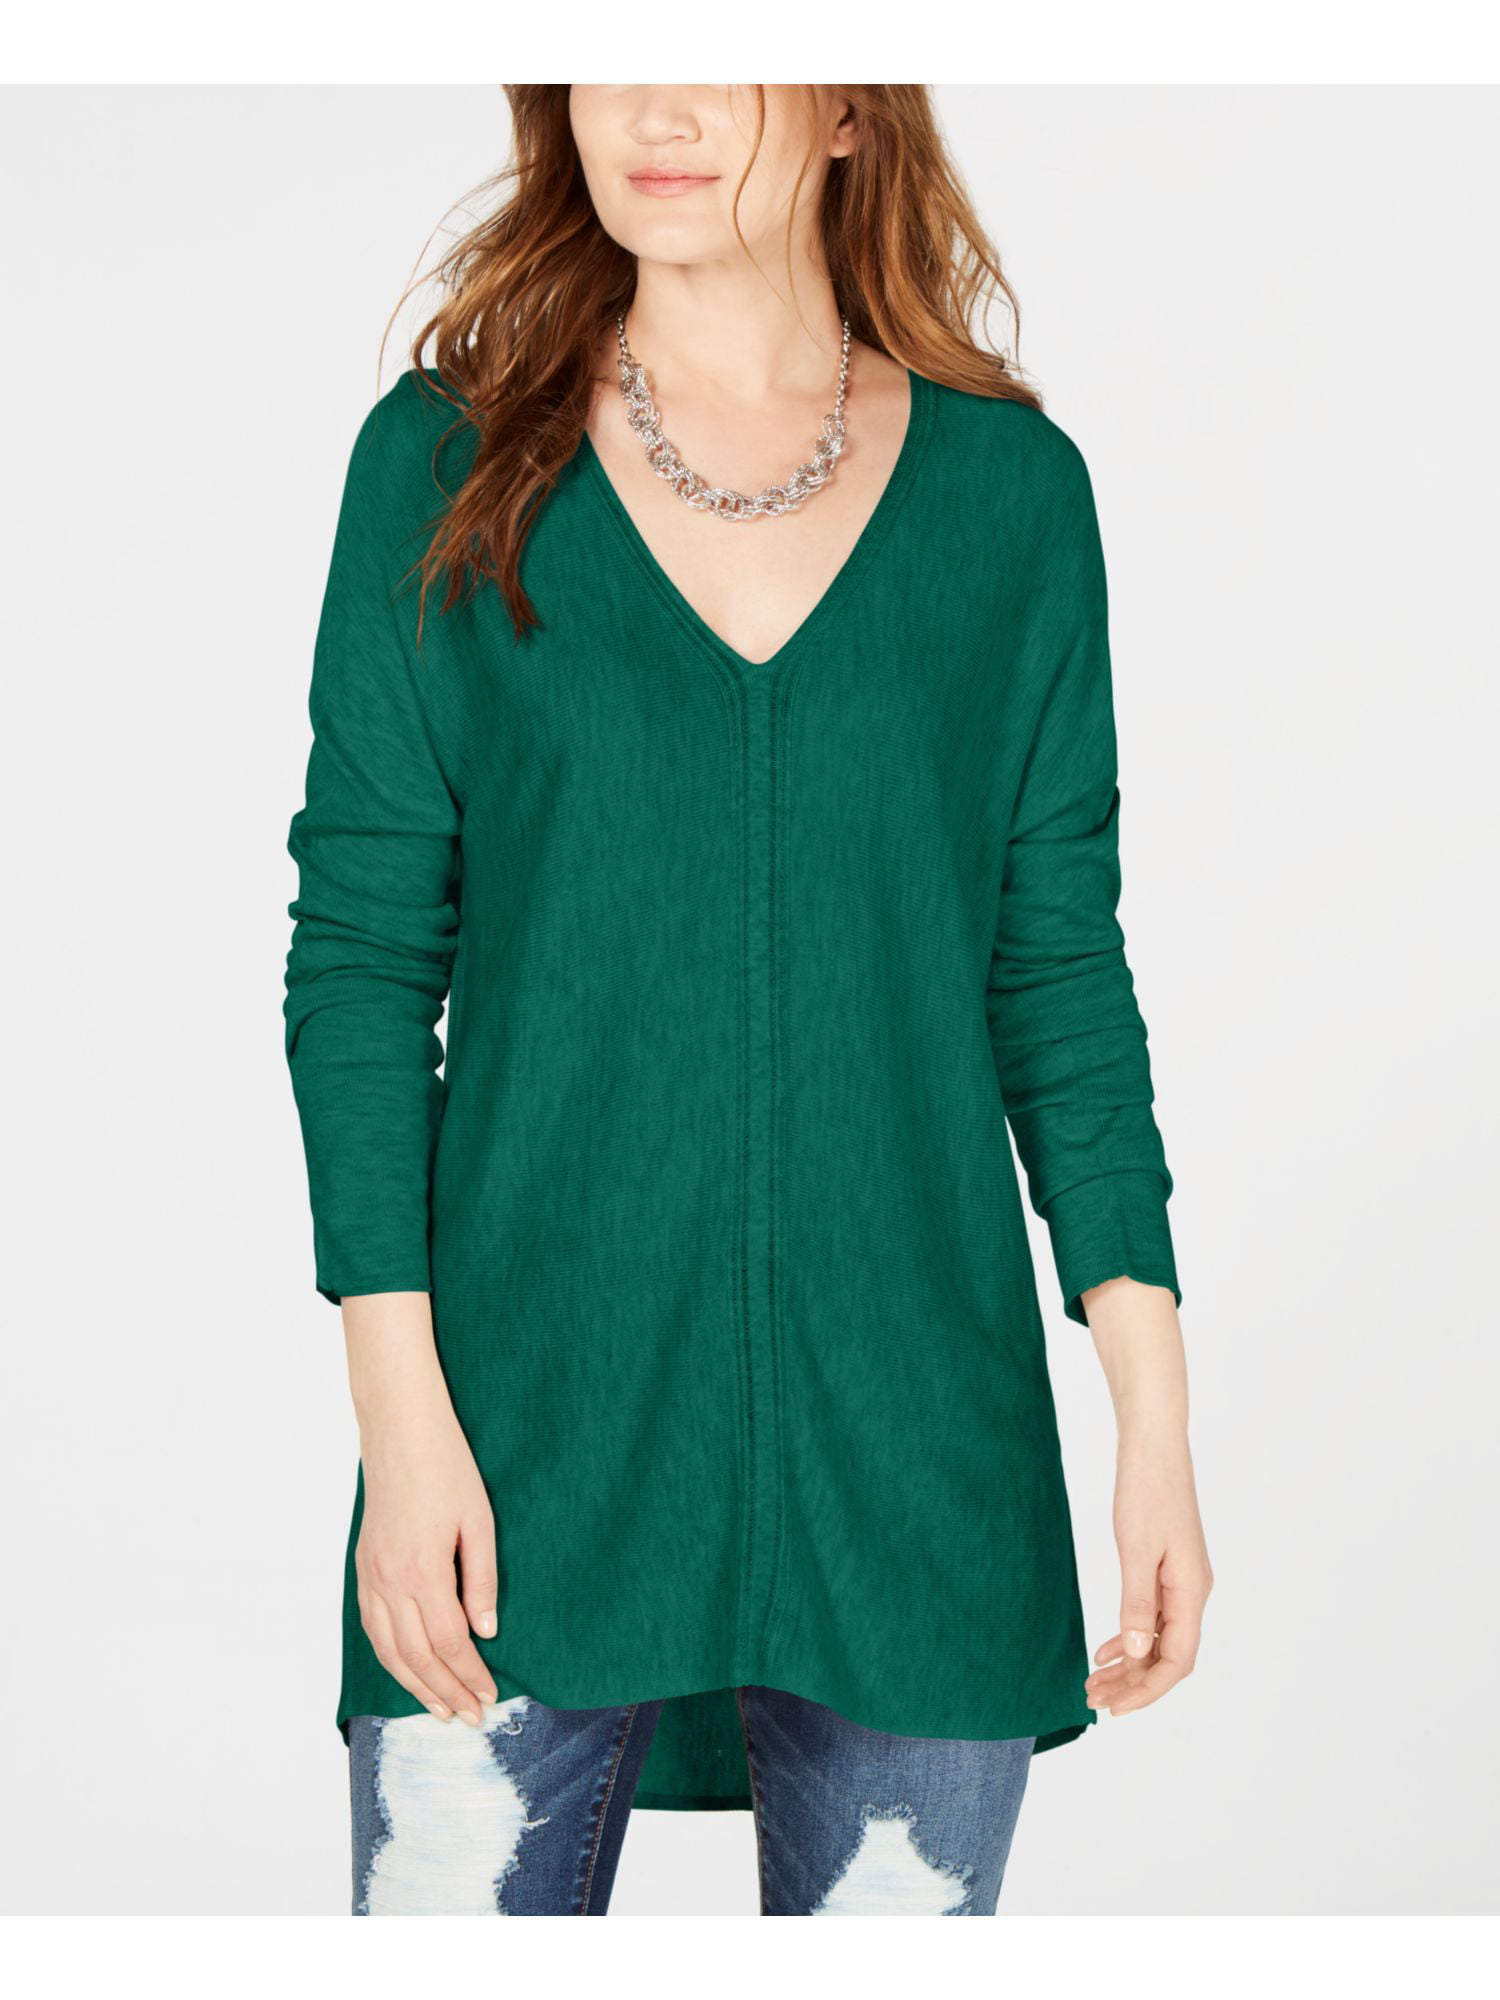 Inc Inc Womens Green Long Sleeve V Neck Tunic Sweater Size M Free